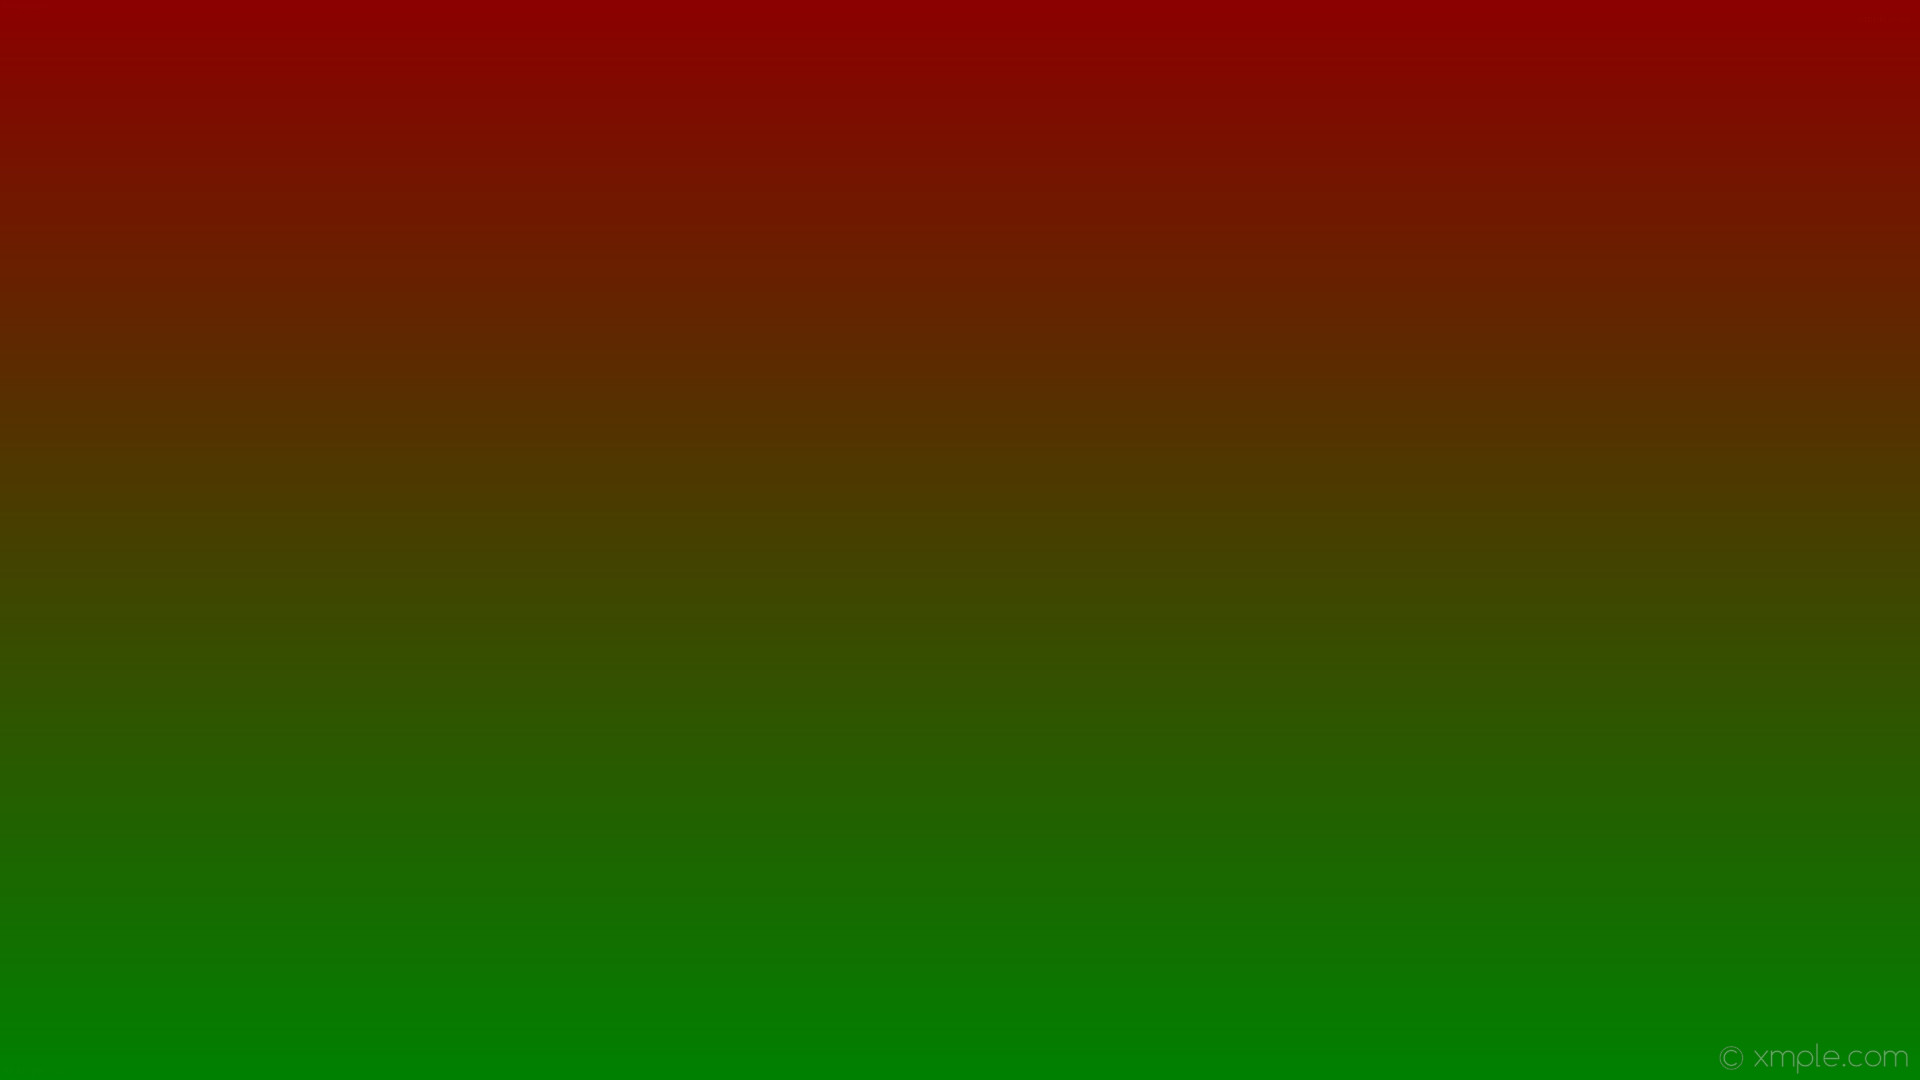 1920x1080 wallpaper gradient red linear green dark red #8b0000 #008000 90Â°